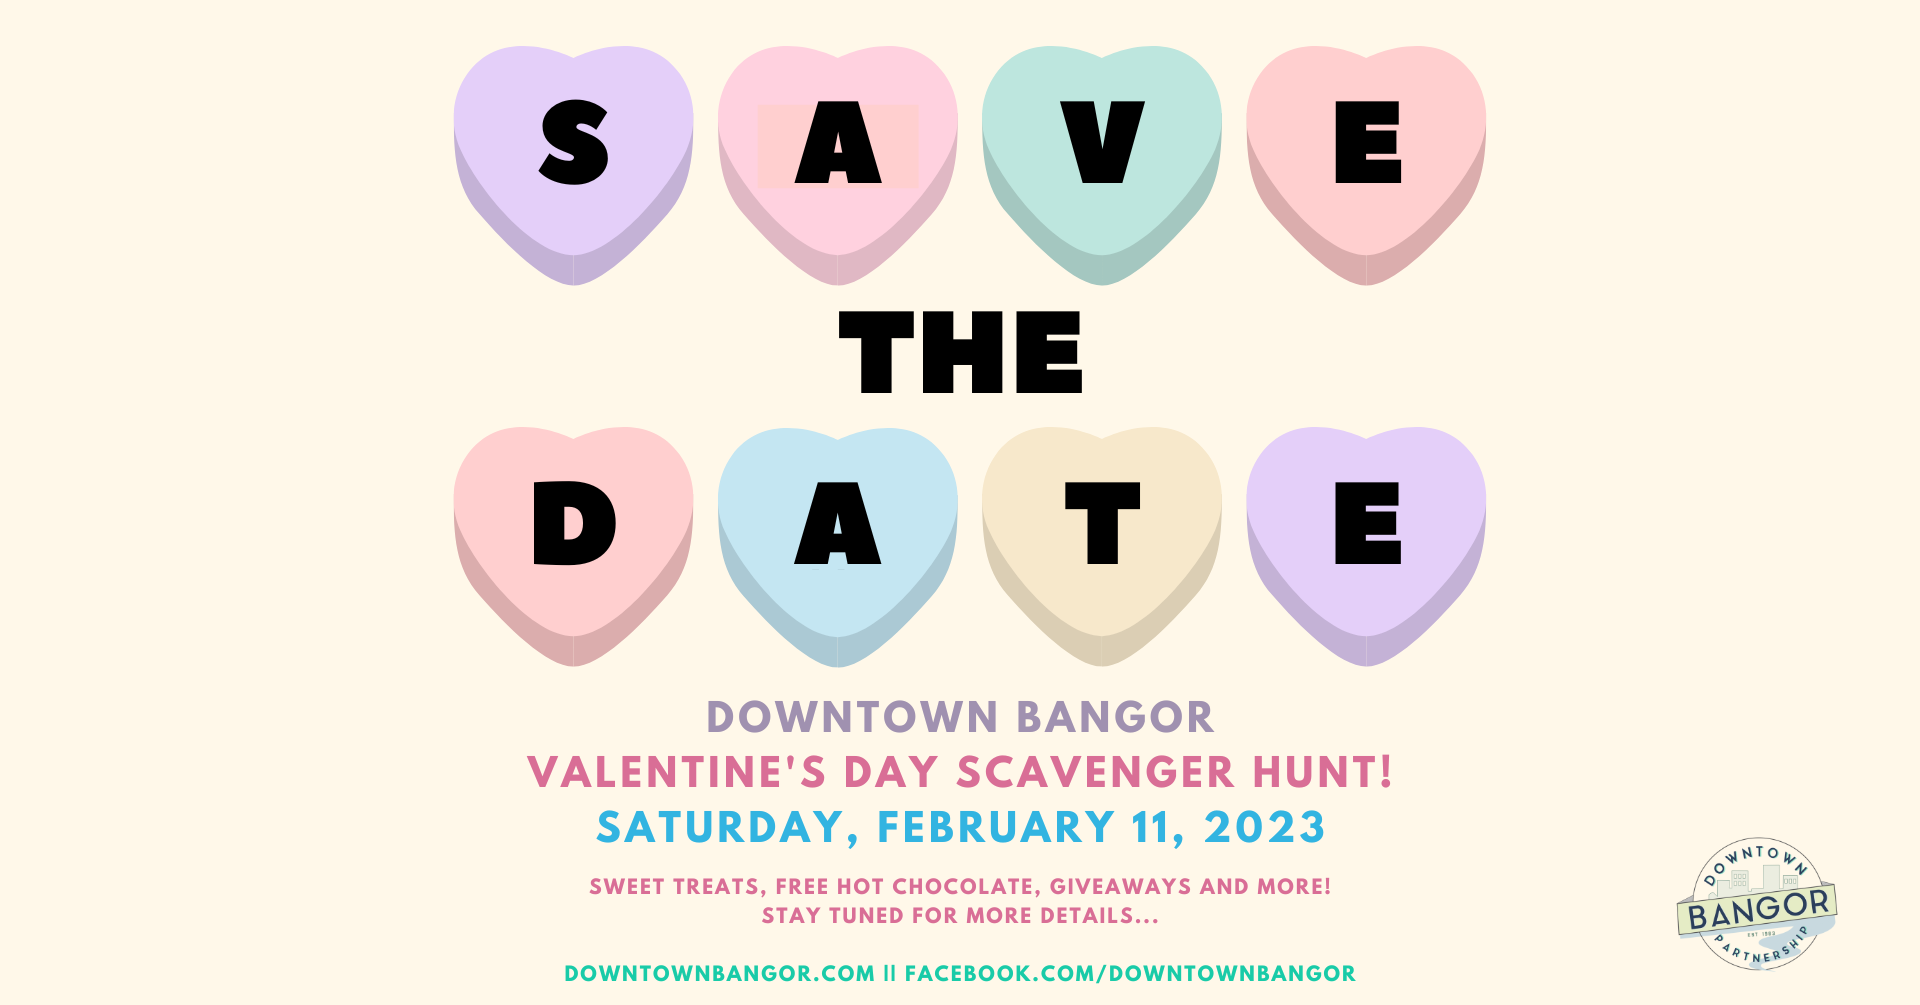 Downtown Bangor Valentine's Day Scavenger Hunt